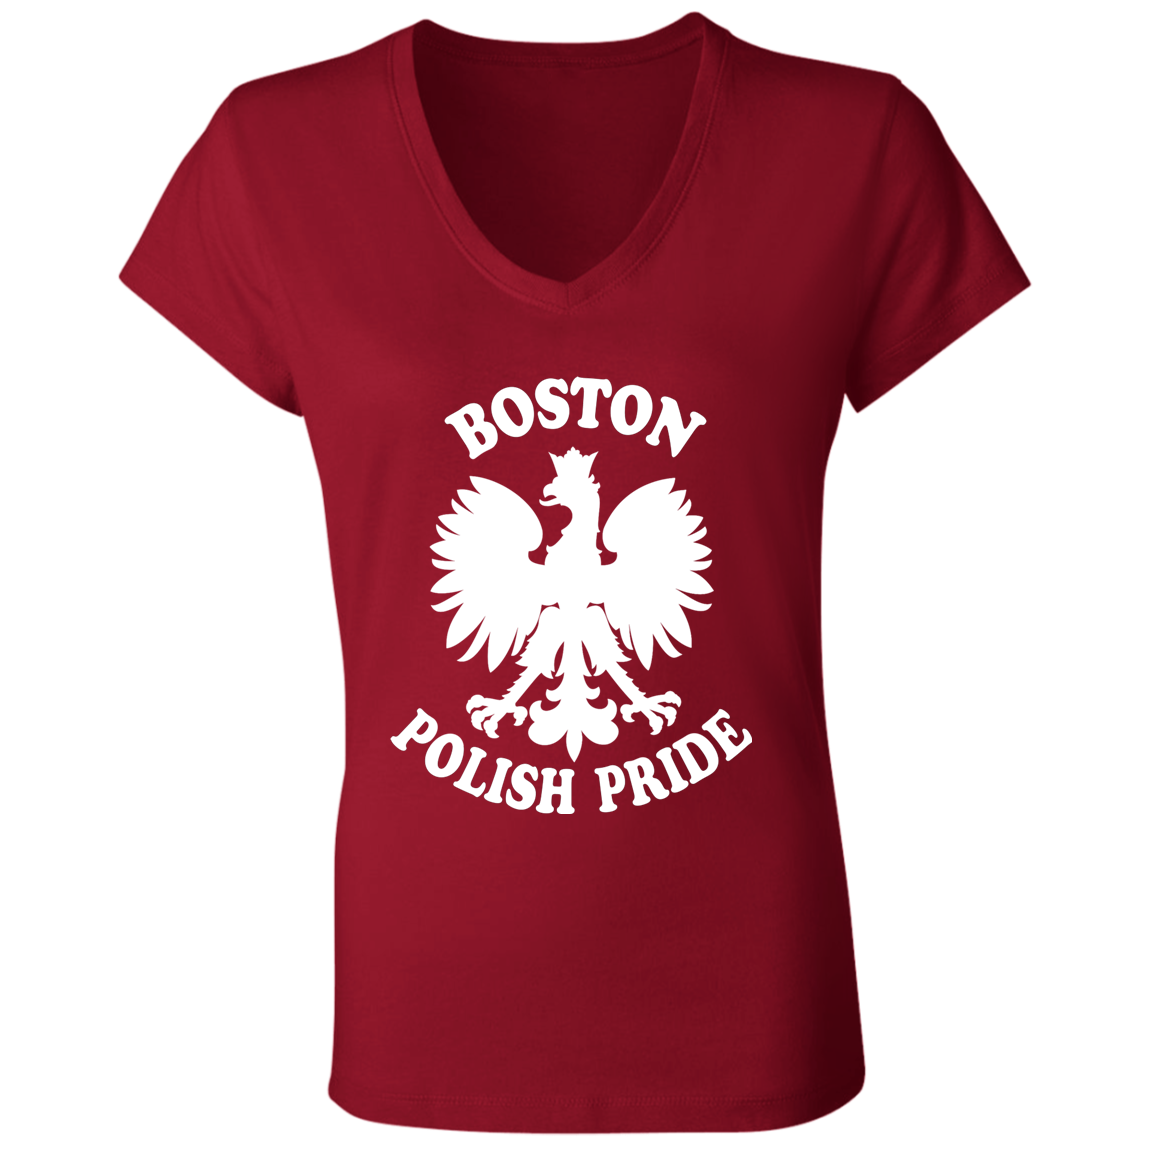 Boston Polish Pride Apparel CustomCat   